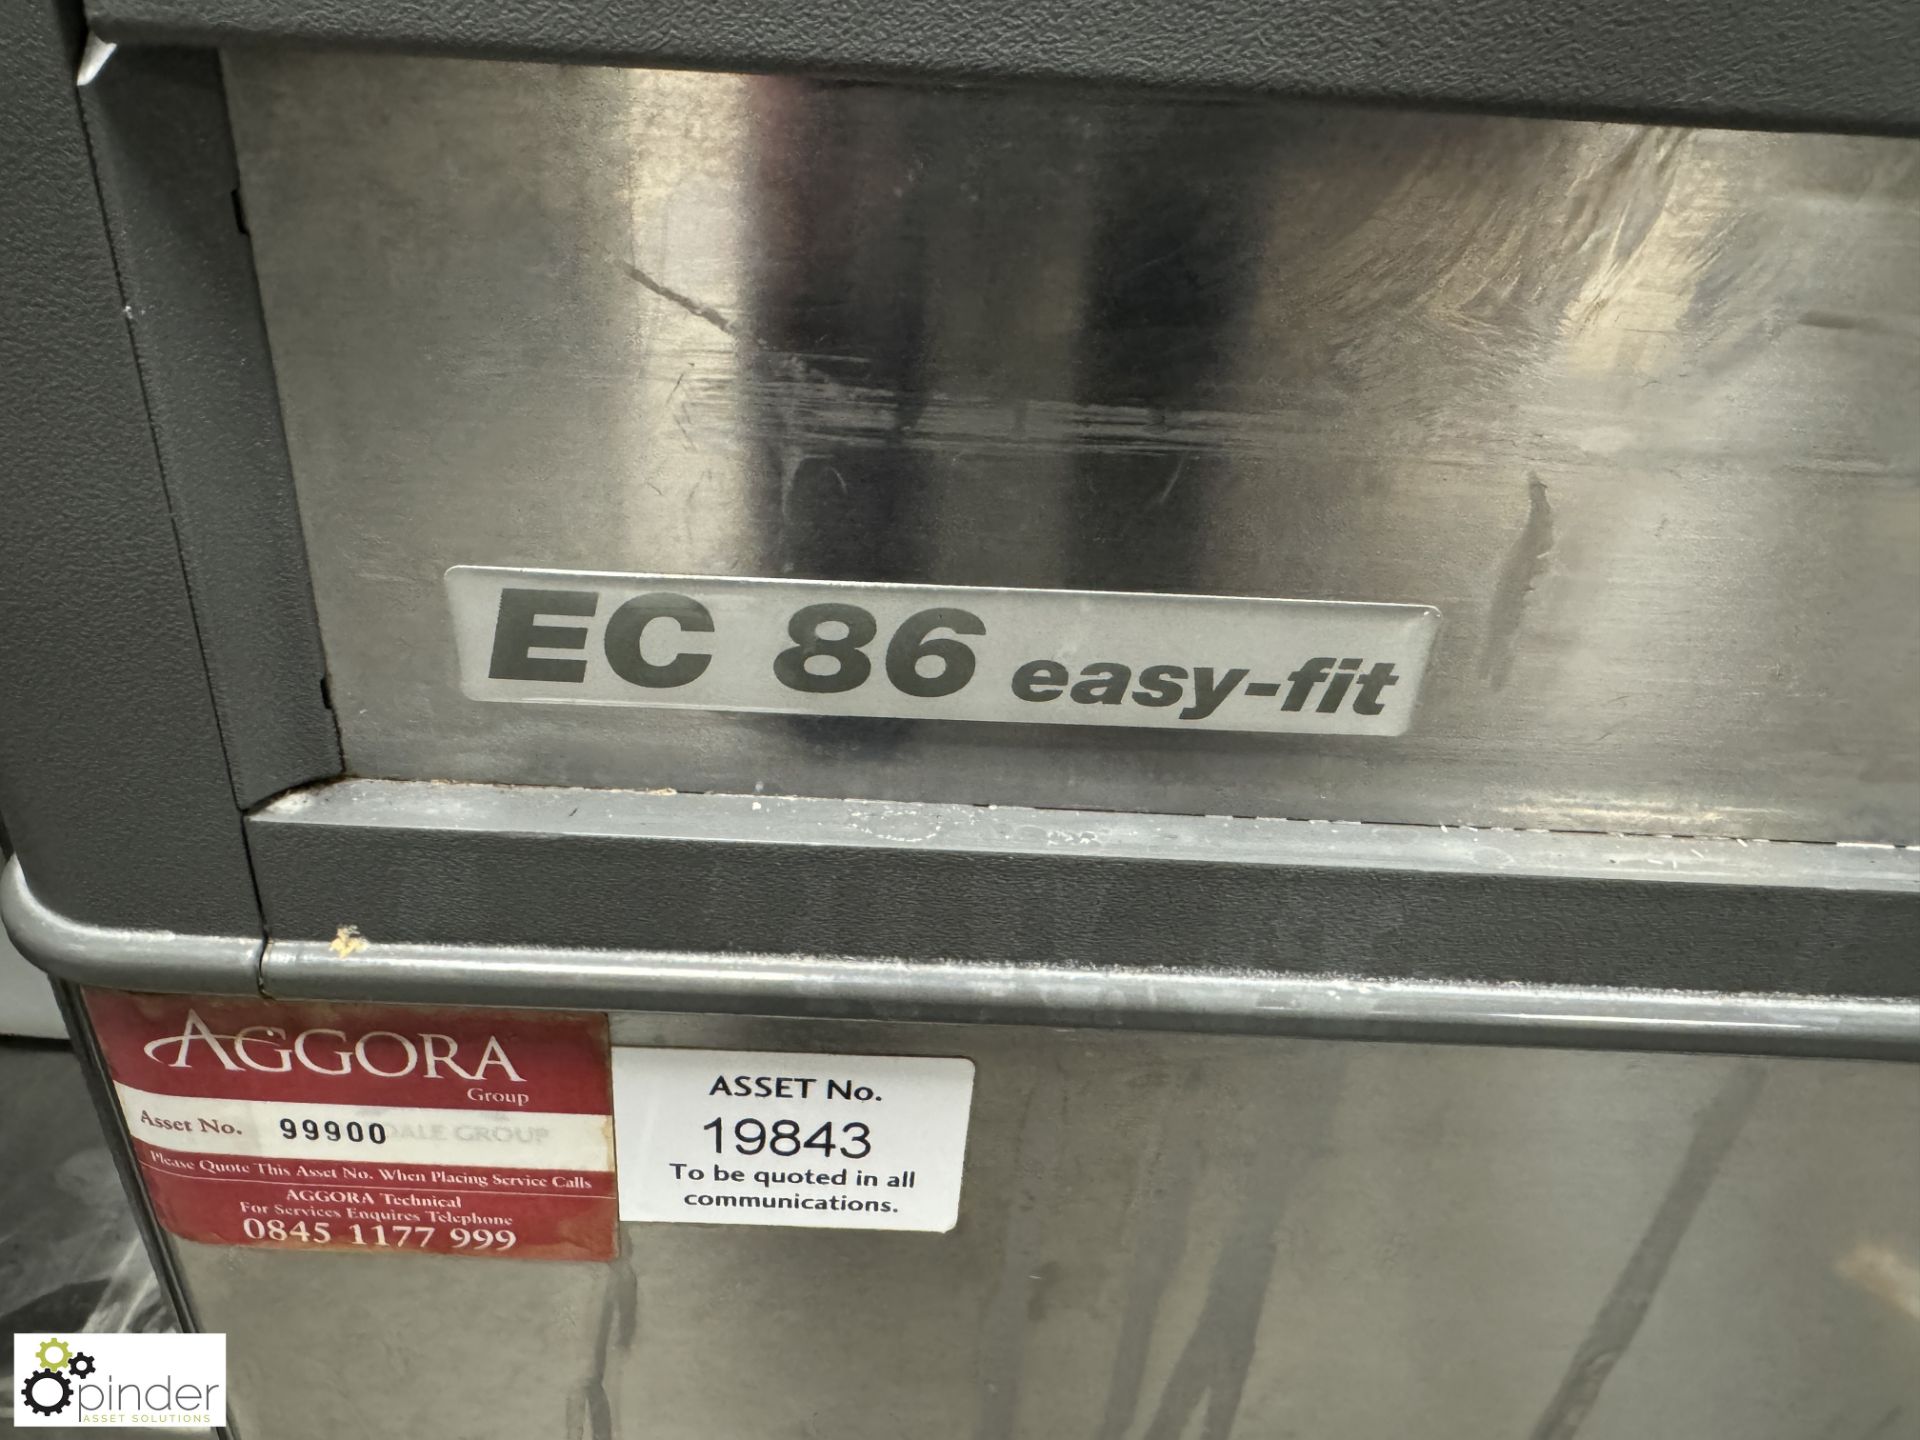 Scotsman EC86 EasyFit Ice Machine (location in building – basement kitchen 2) - Image 3 of 4